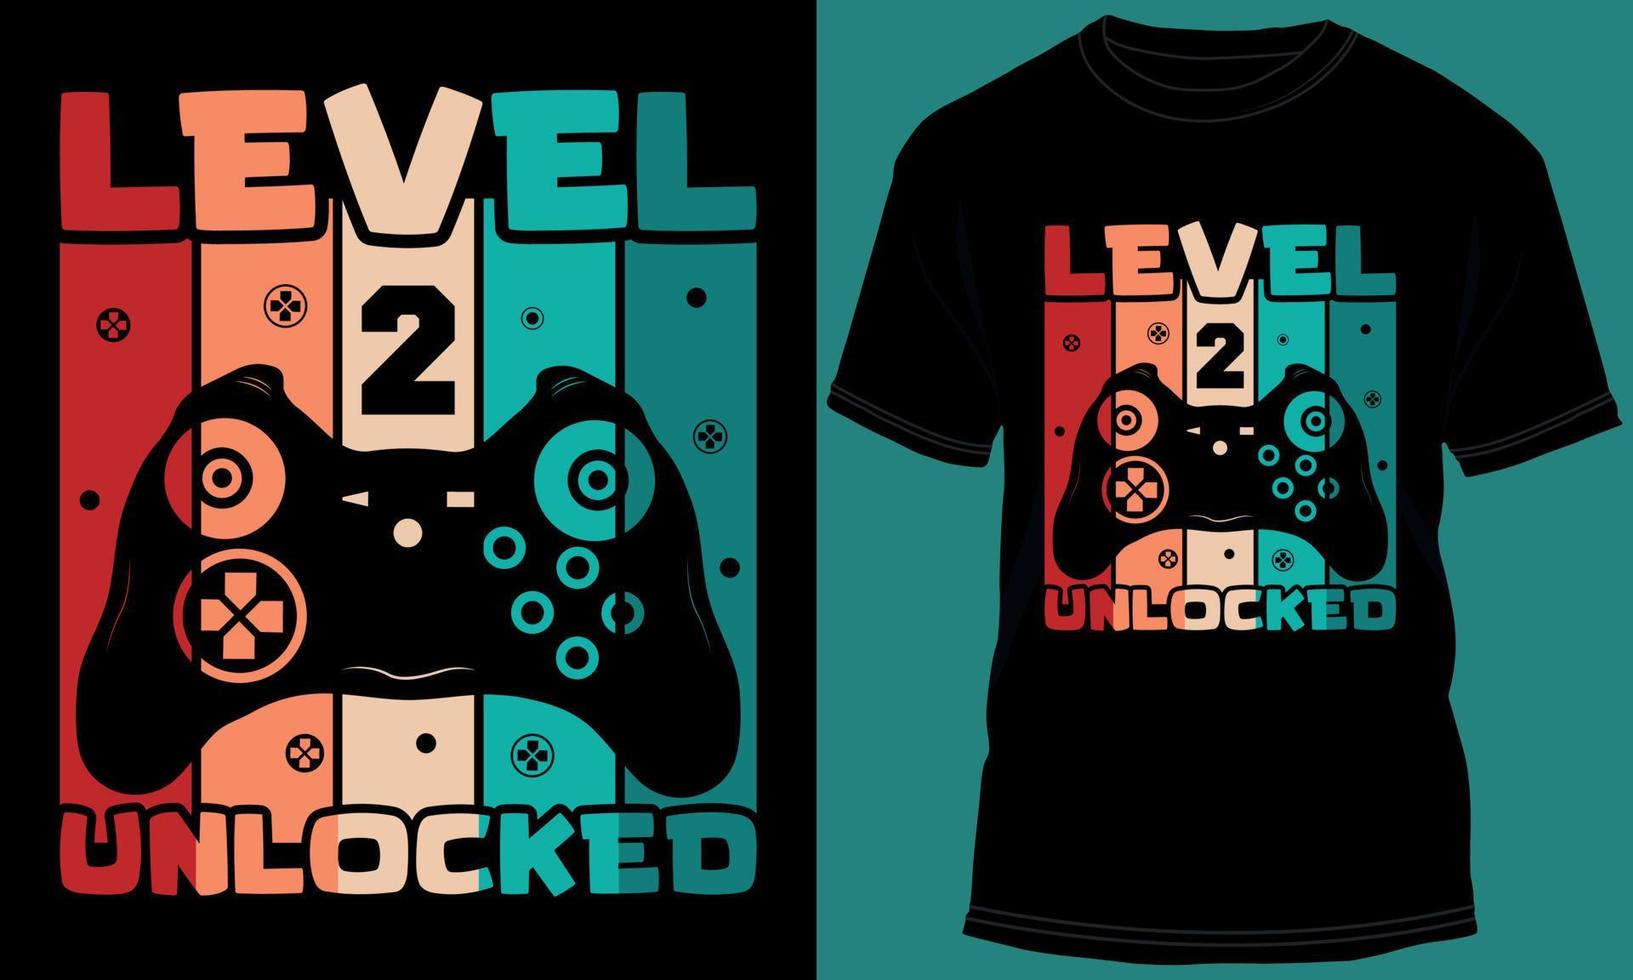 Spieler oder Spielen Niveau 2 freigeschaltet T-Shirt Design vektor